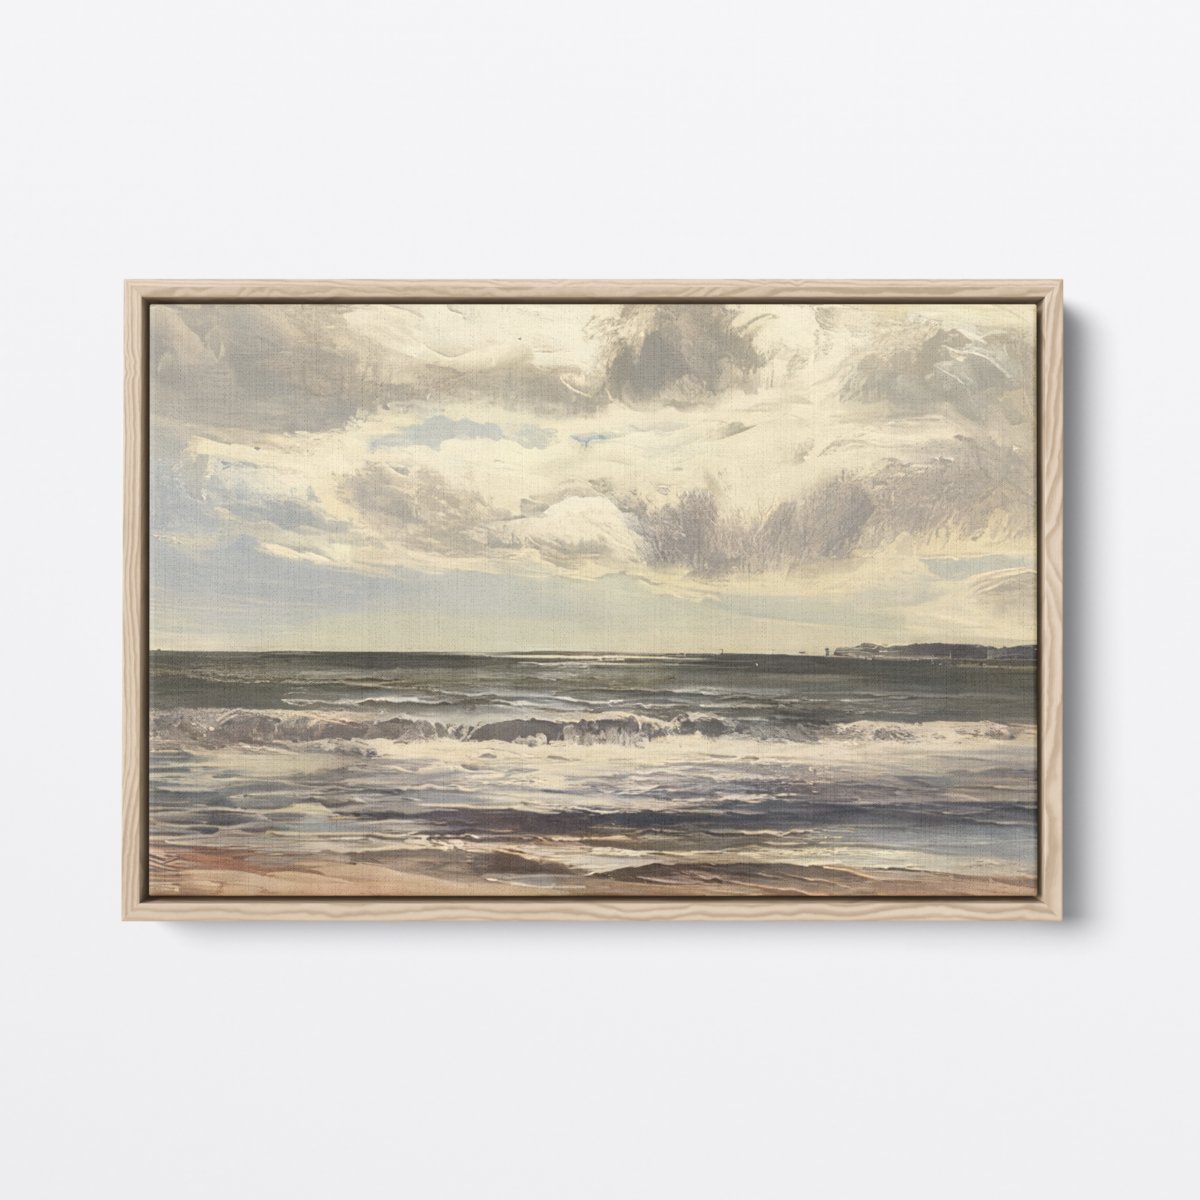 Tides Over Sands | Sidney Percy | Ave Legato | Canvas Art Prints | Vintage Artwork